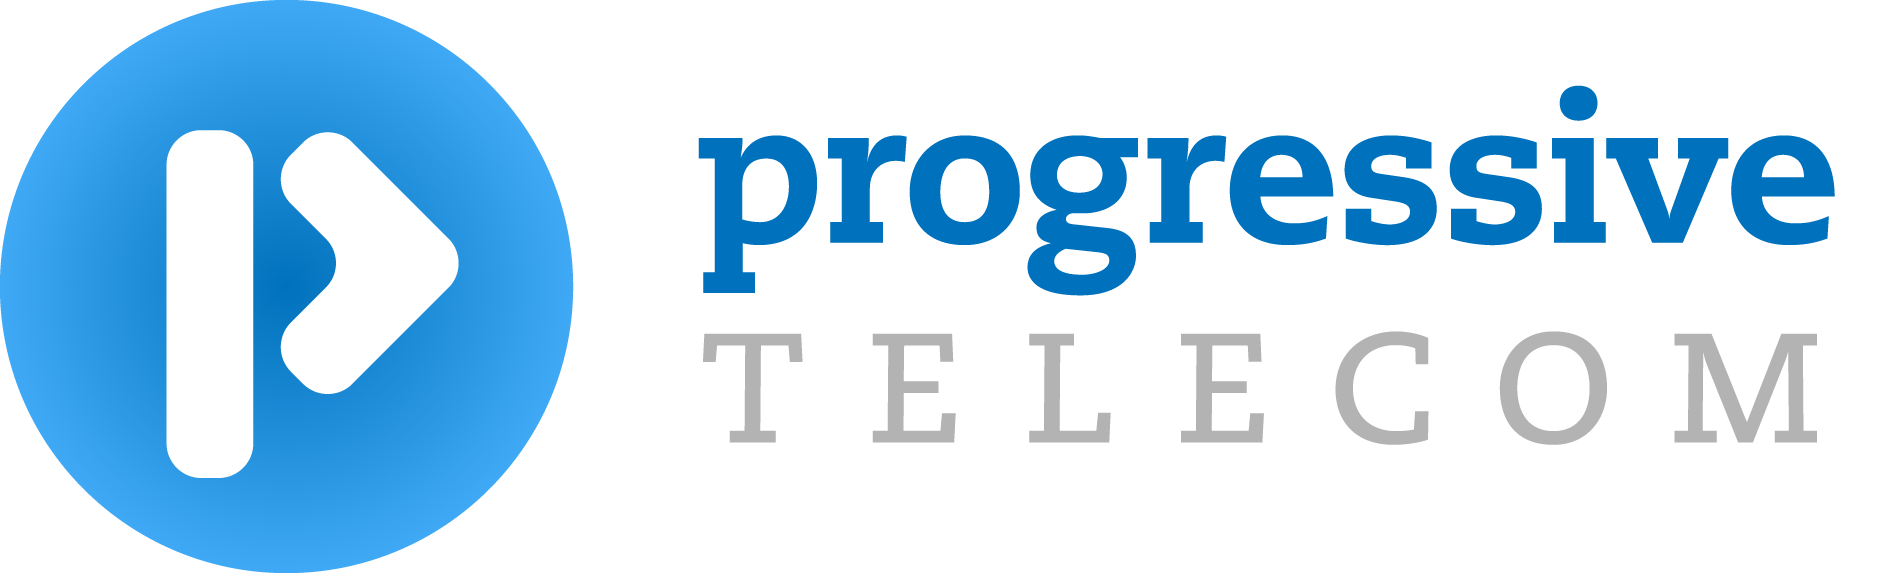 progressivetelecom Logo